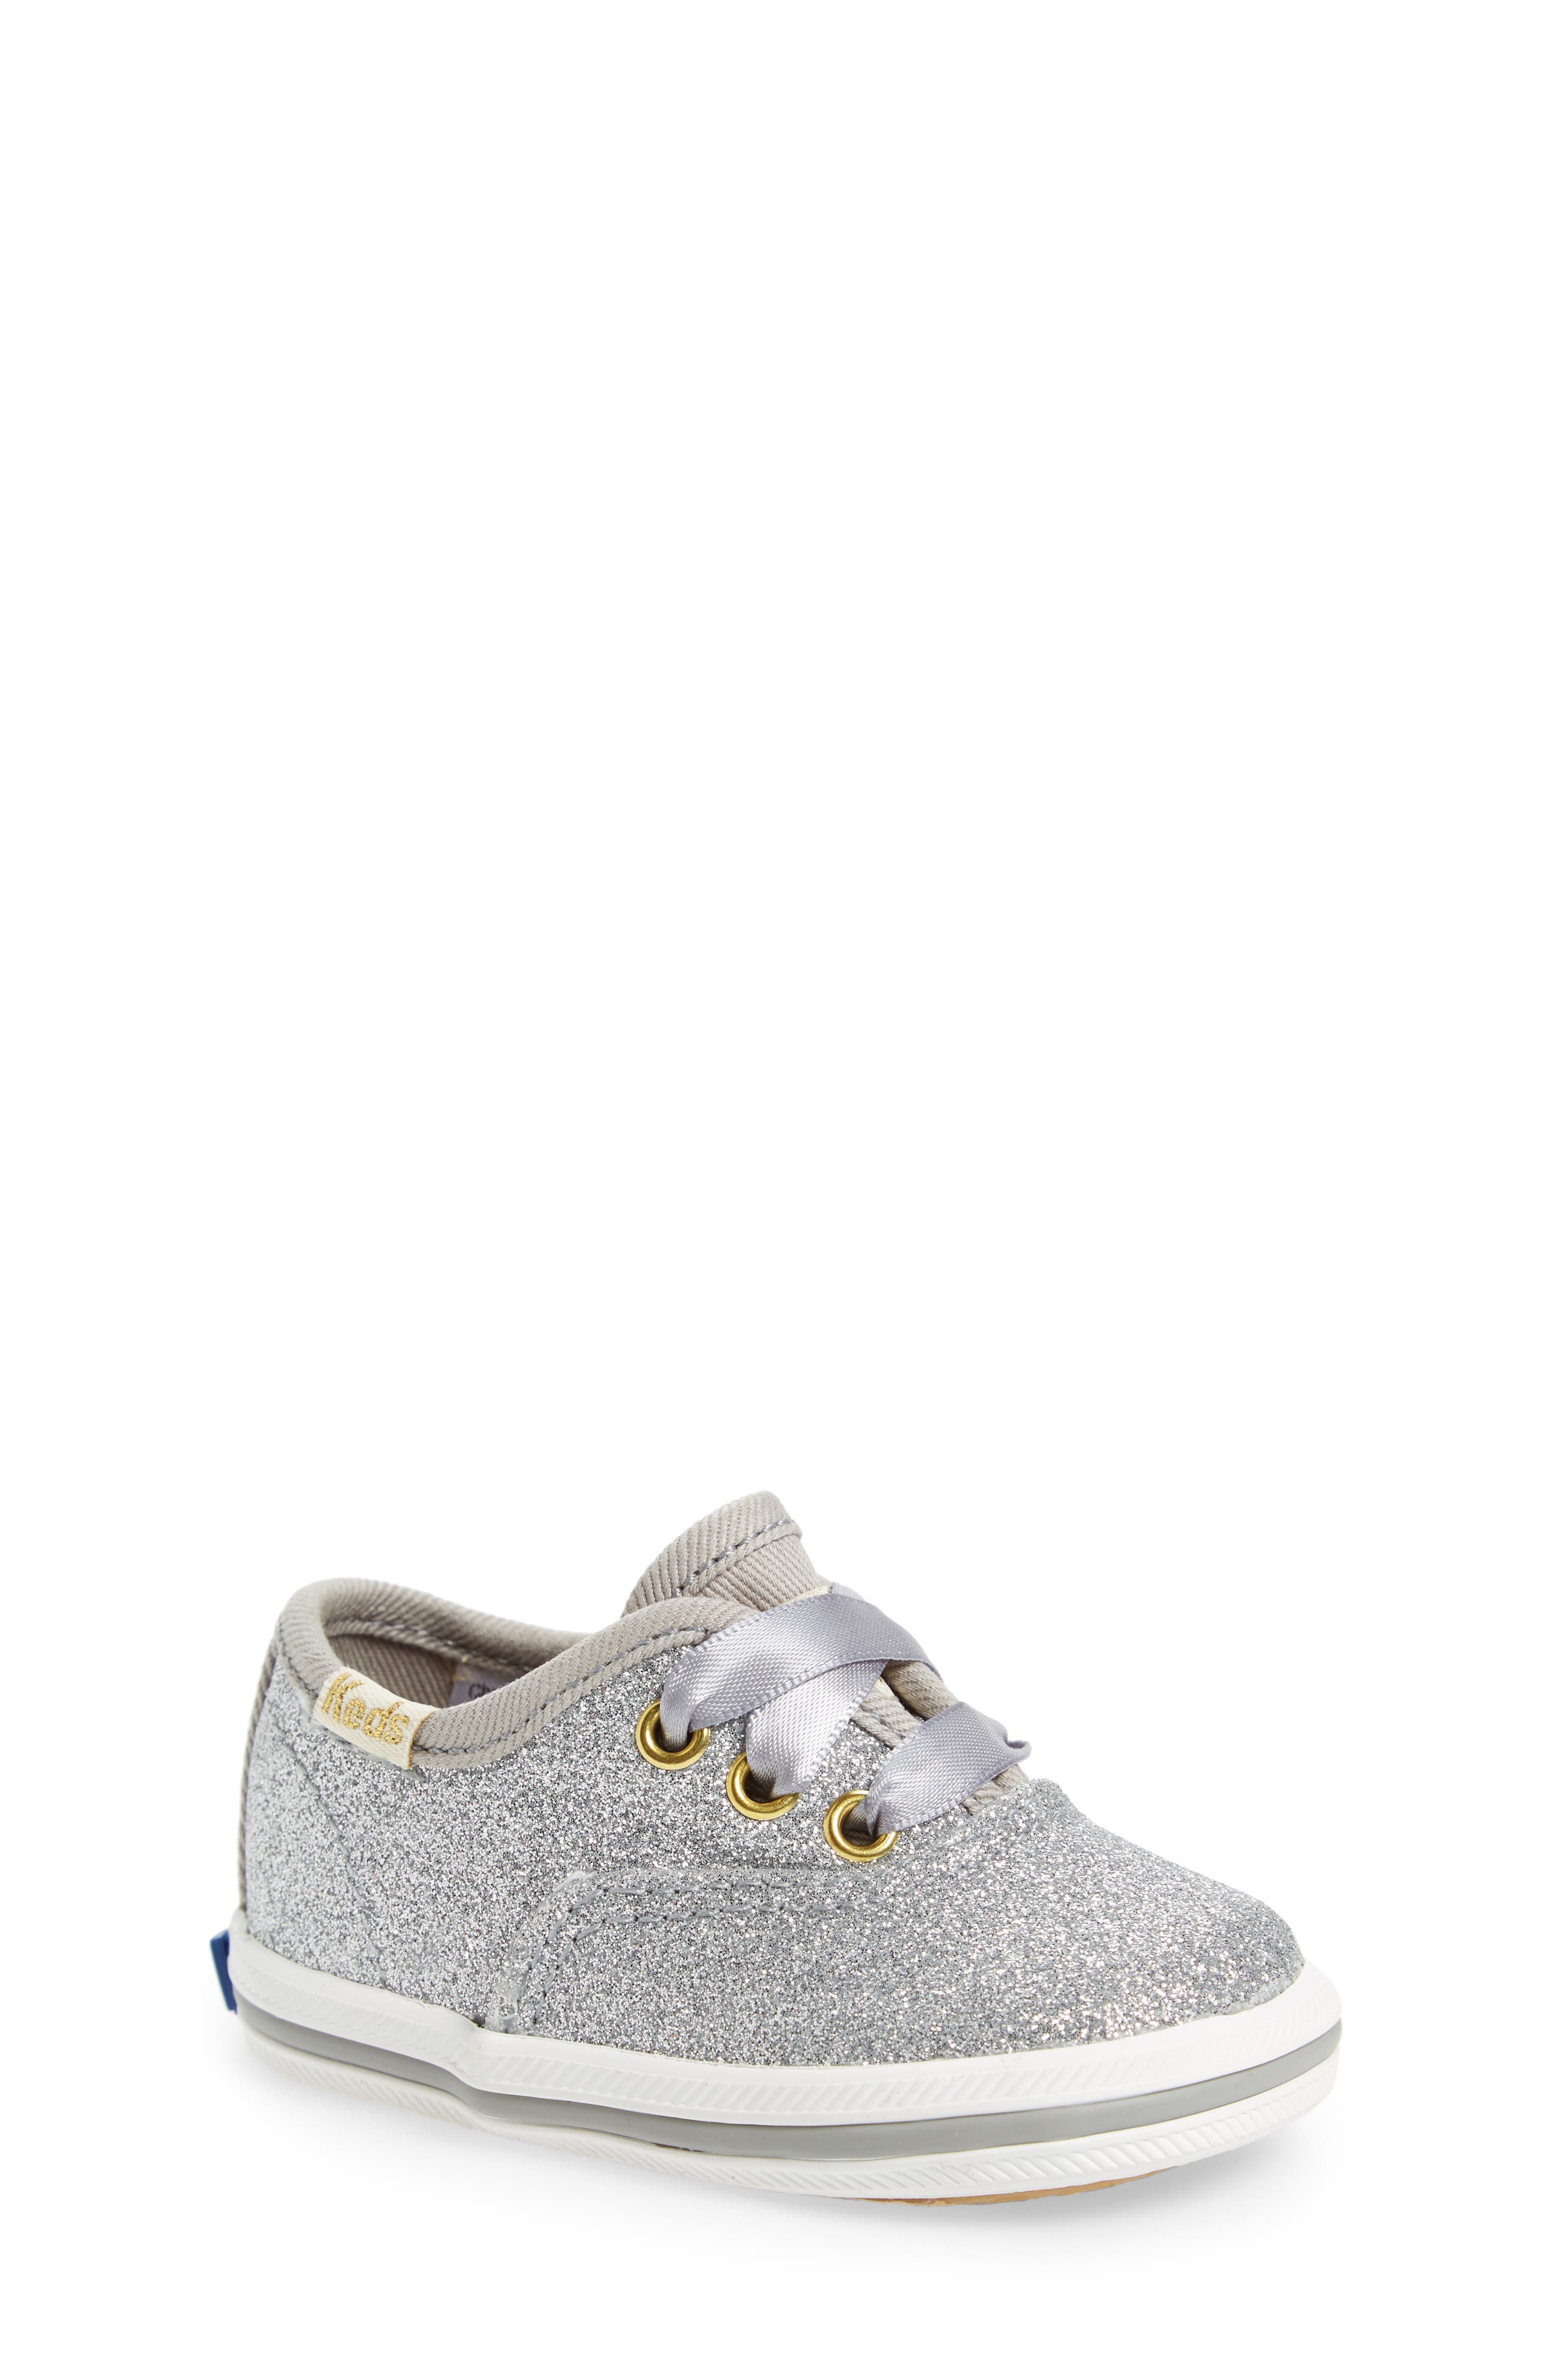 UPC 884401127210 product image for Infant Girl's Keds X Kate Spade New York Champion Glitter Crib Shoe, Size 1 M -  | upcitemdb.com